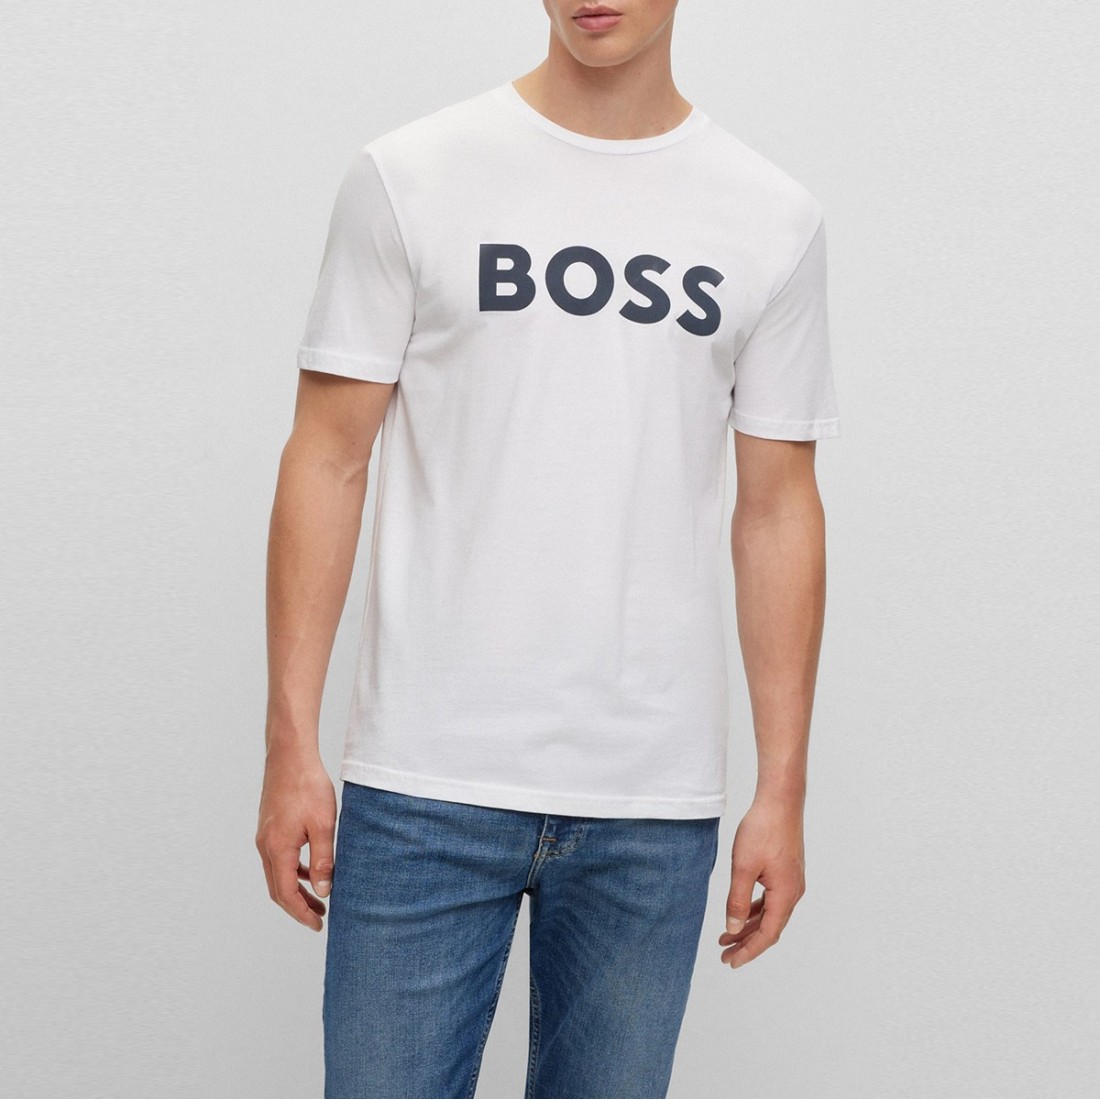 Image of BOSS - T-shirt Thinking - Colore: Bianco,Taglia: L